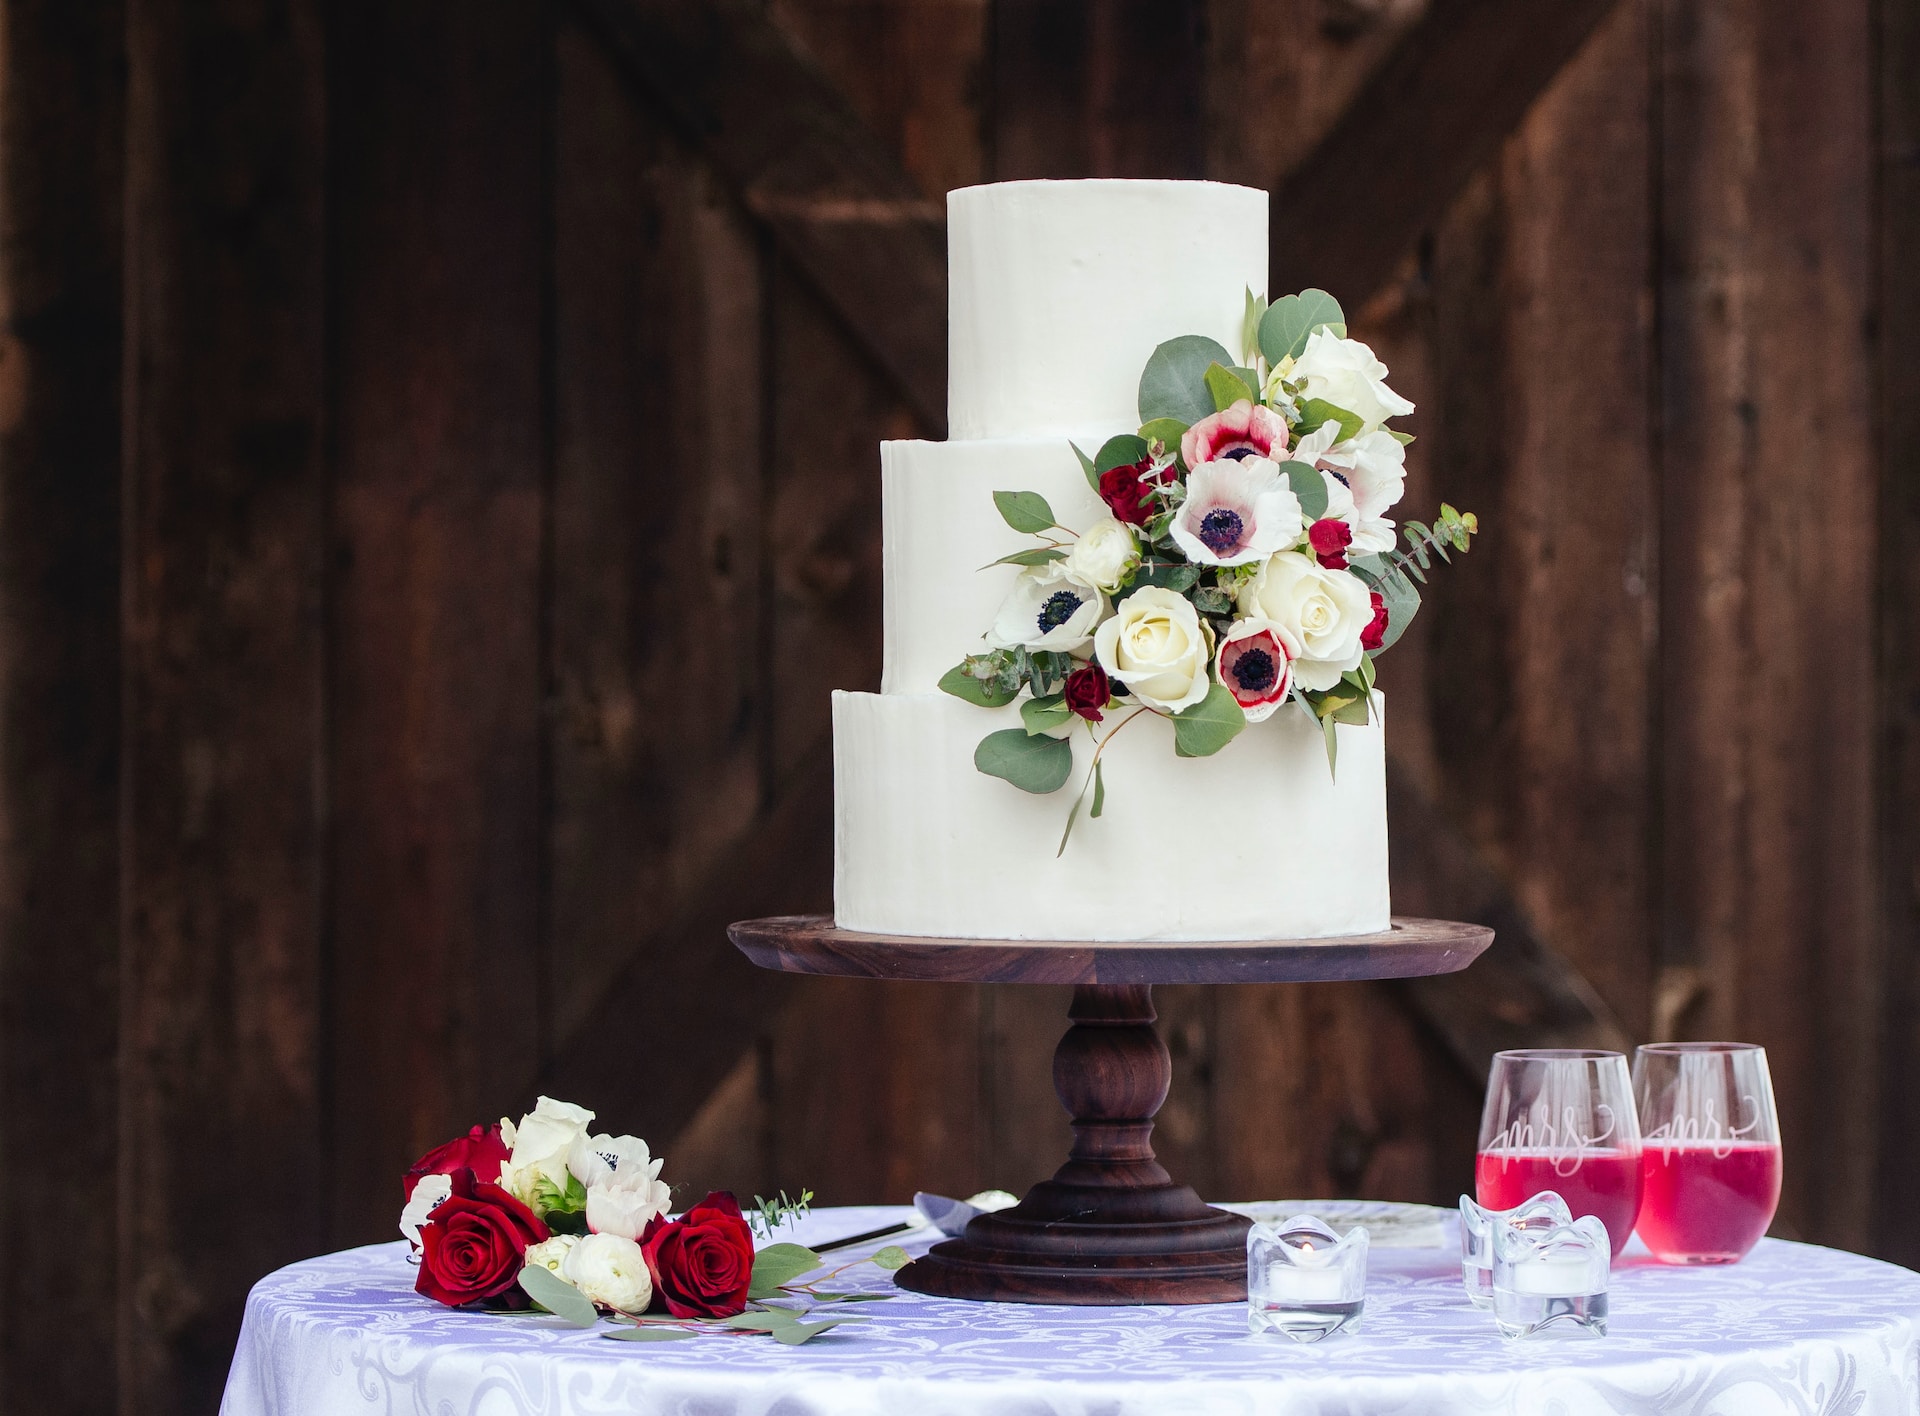 Choosing the Right Wedding Cakes